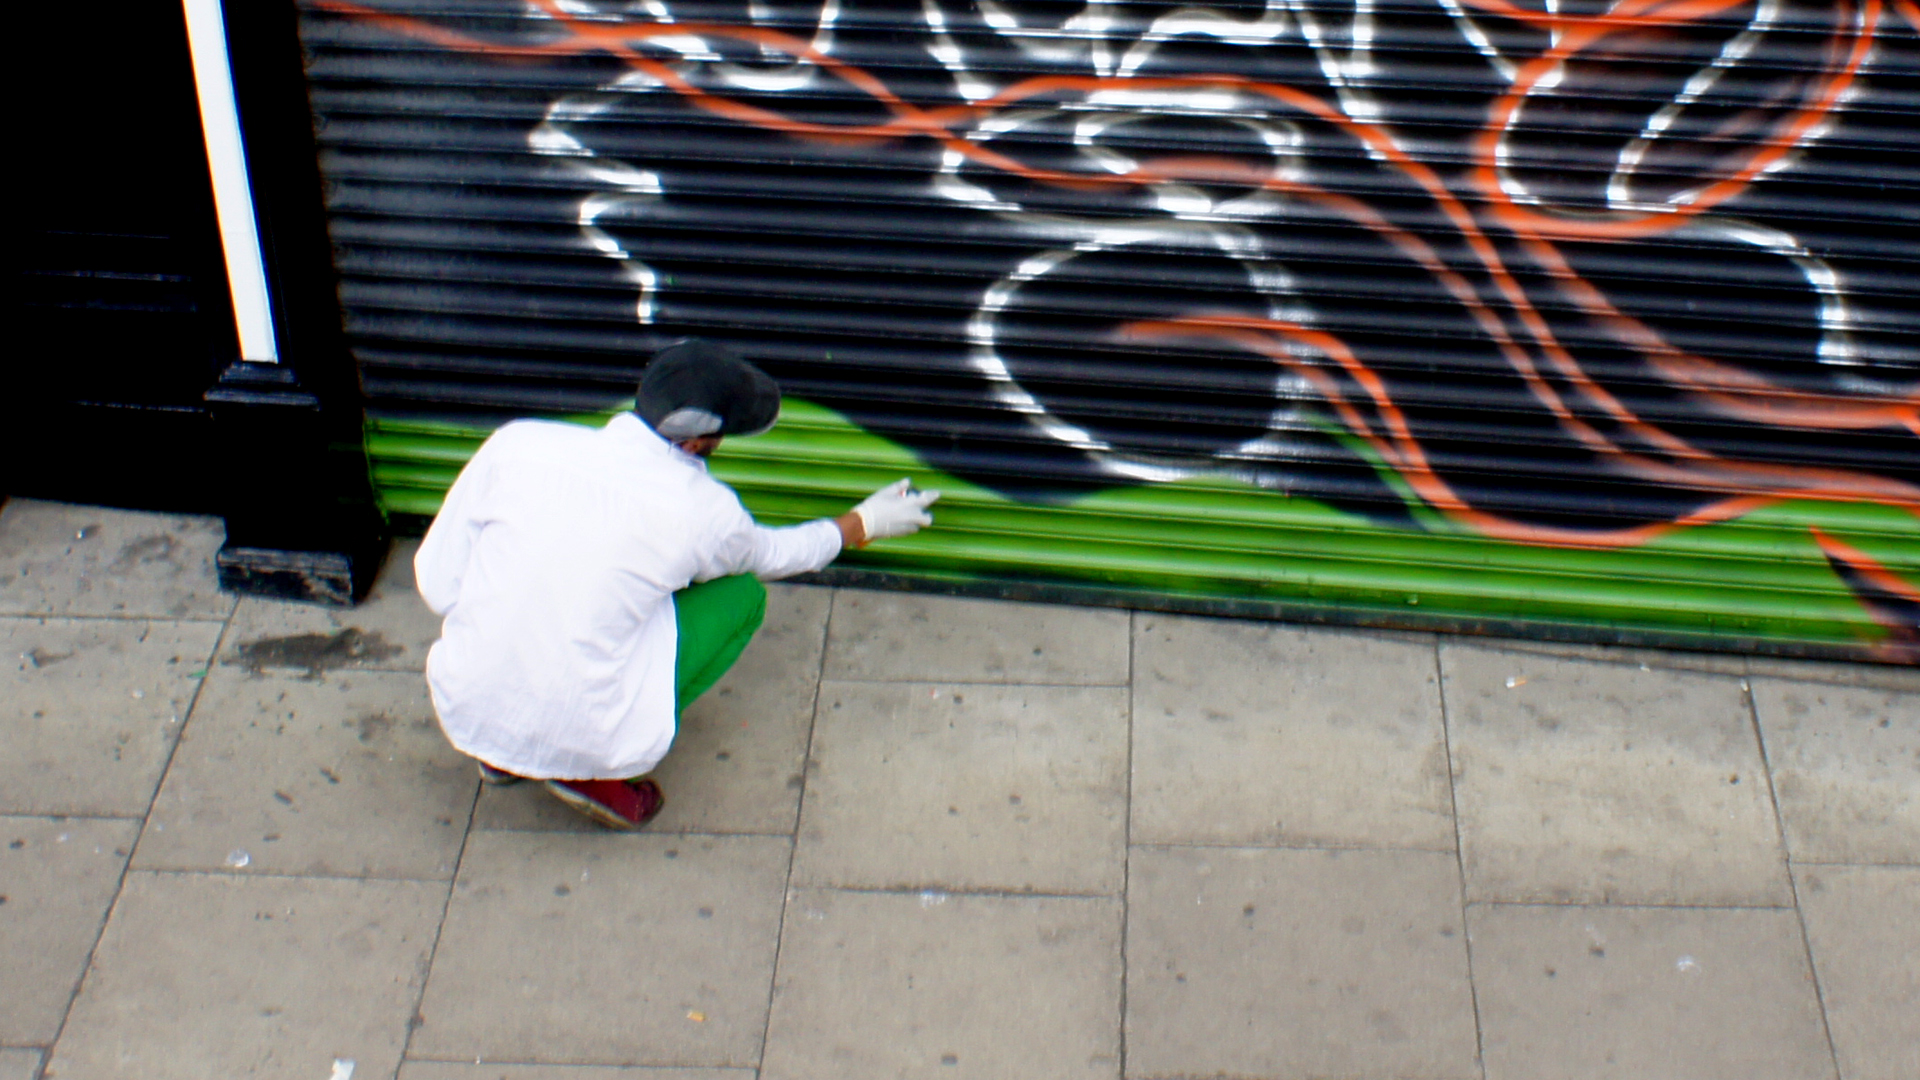 Street Photography 03: The Sprayer